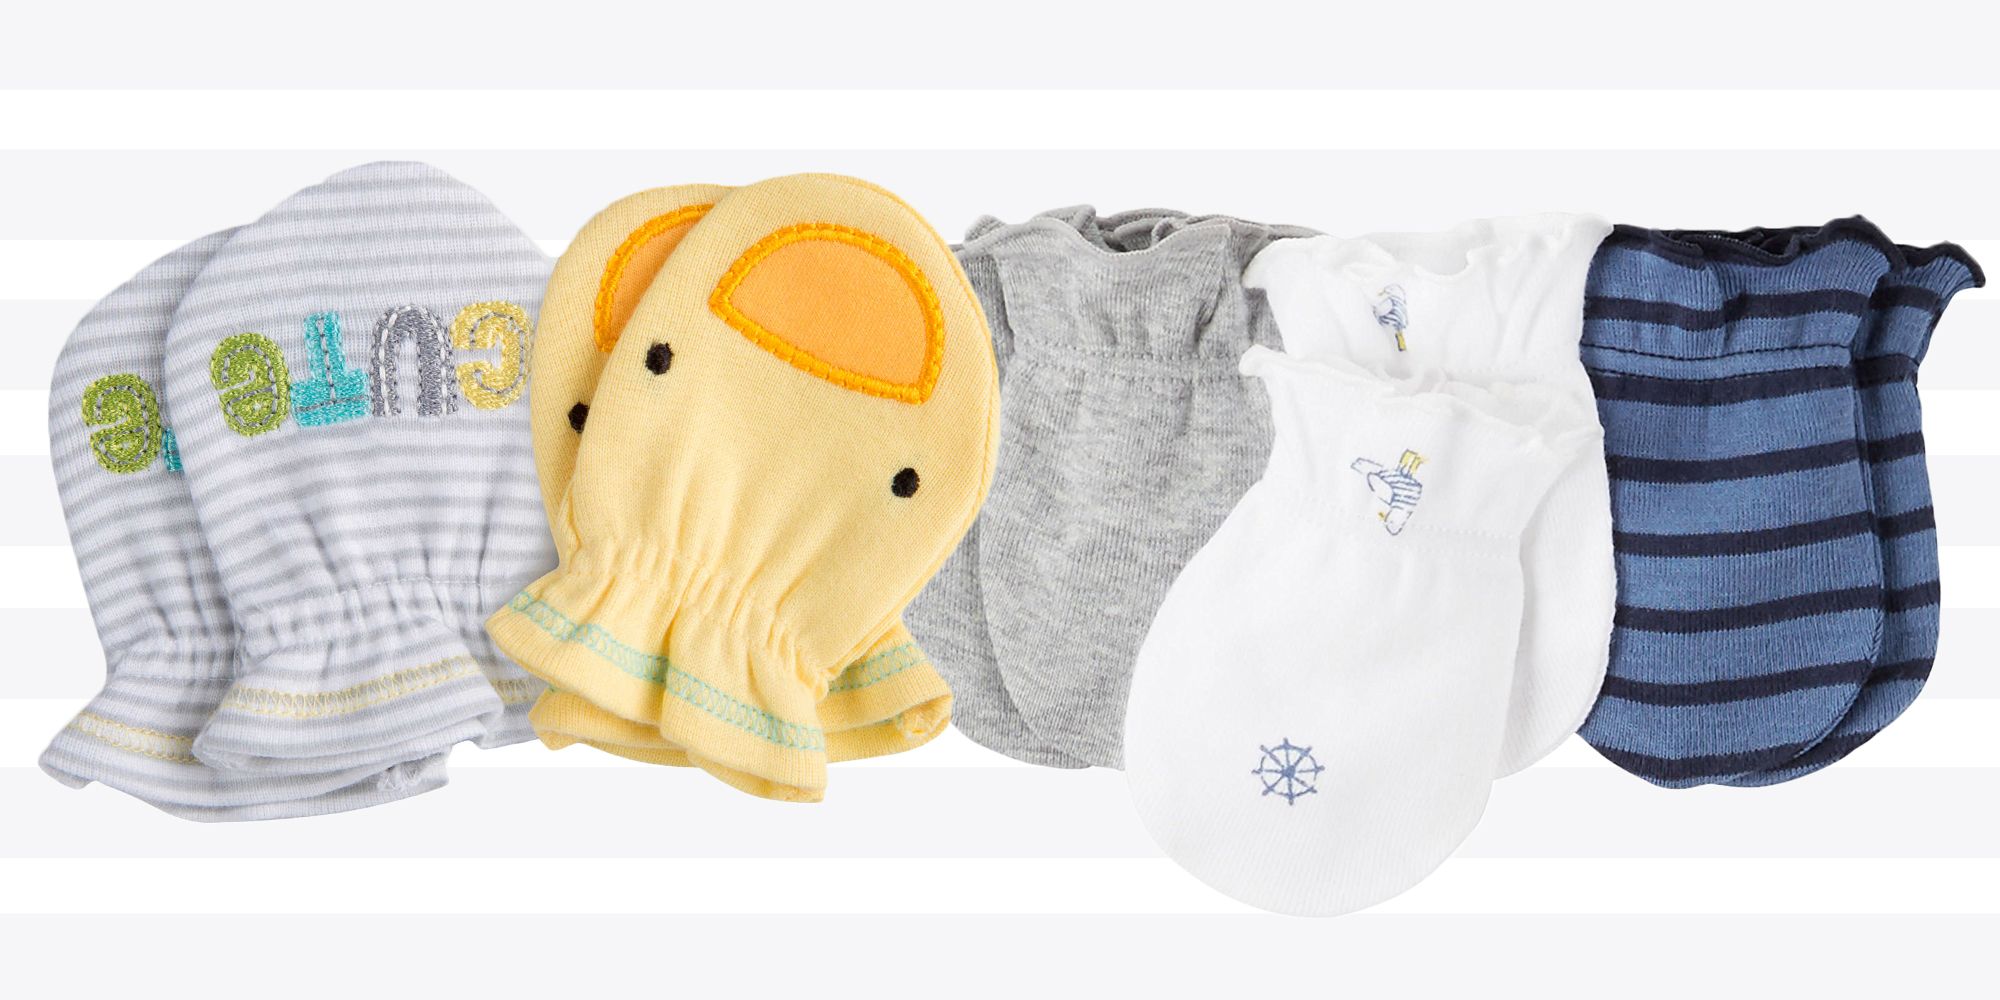 Newborn Baby Mittens No Scratch Mittens Soft Adjustable Anti Scratch Cotton Gloves Mittens for Baby Care 